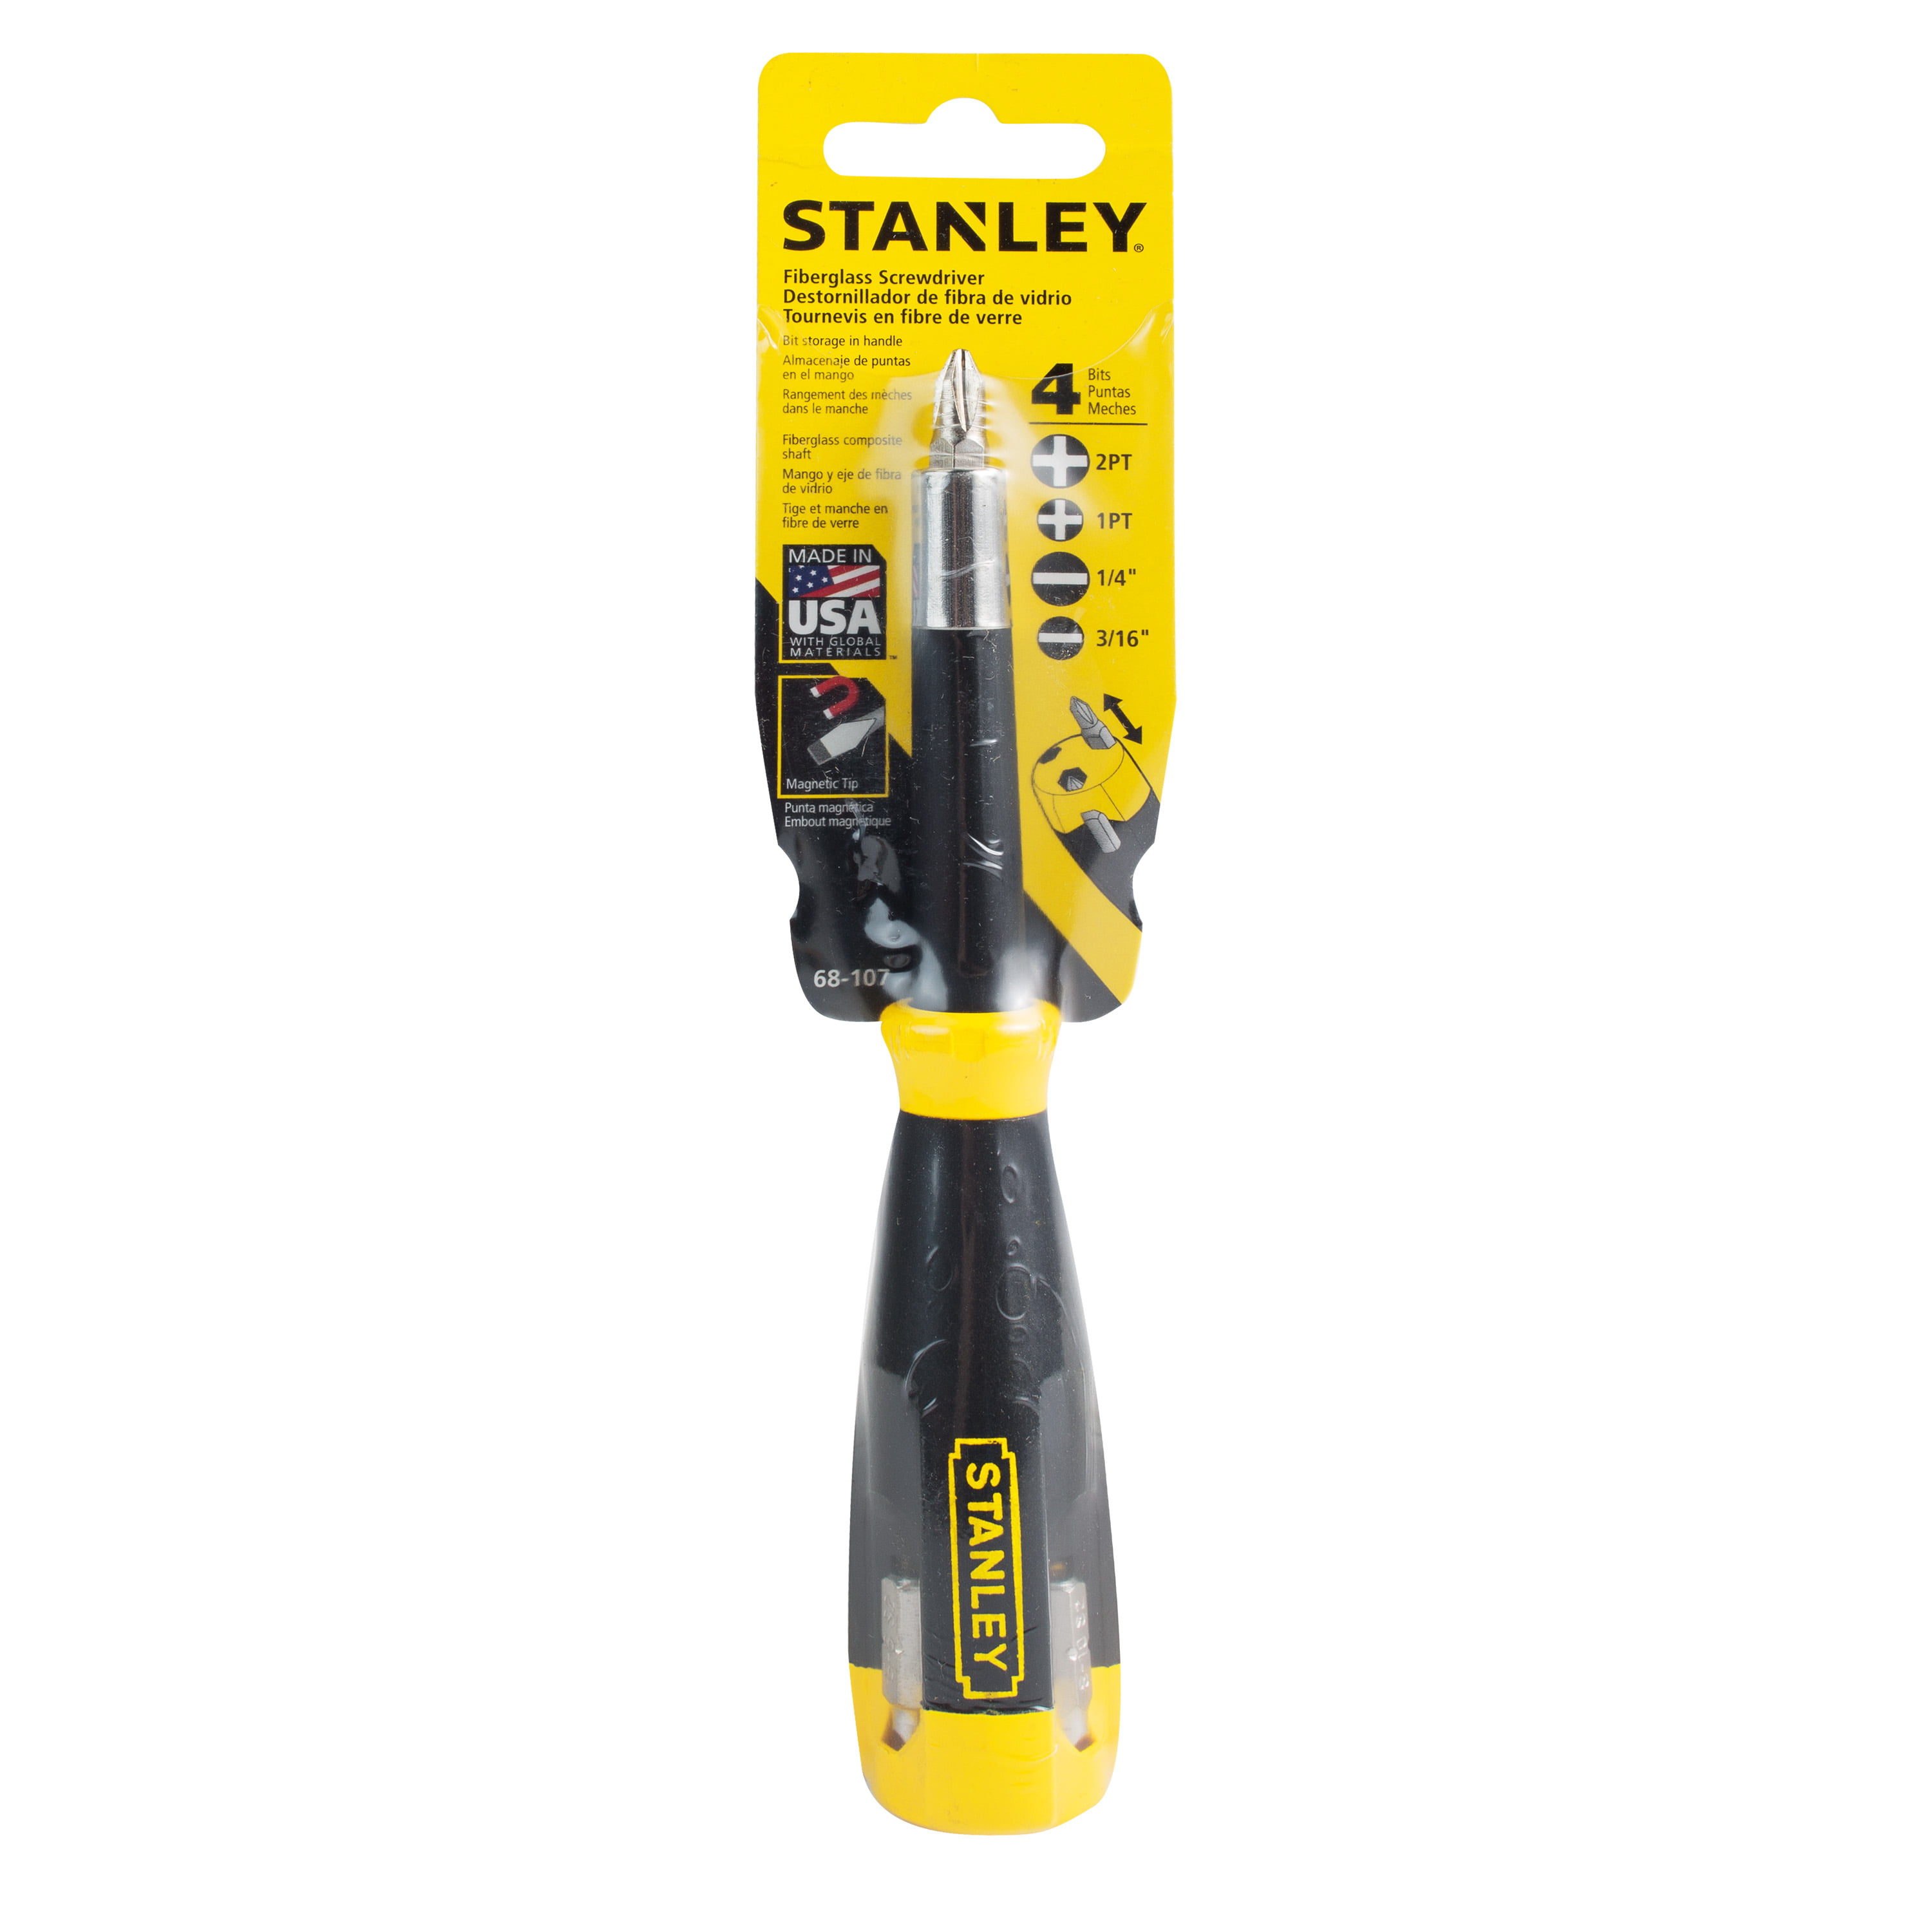 Stanley - 10 Piece Fast Change Drill & Drive Set